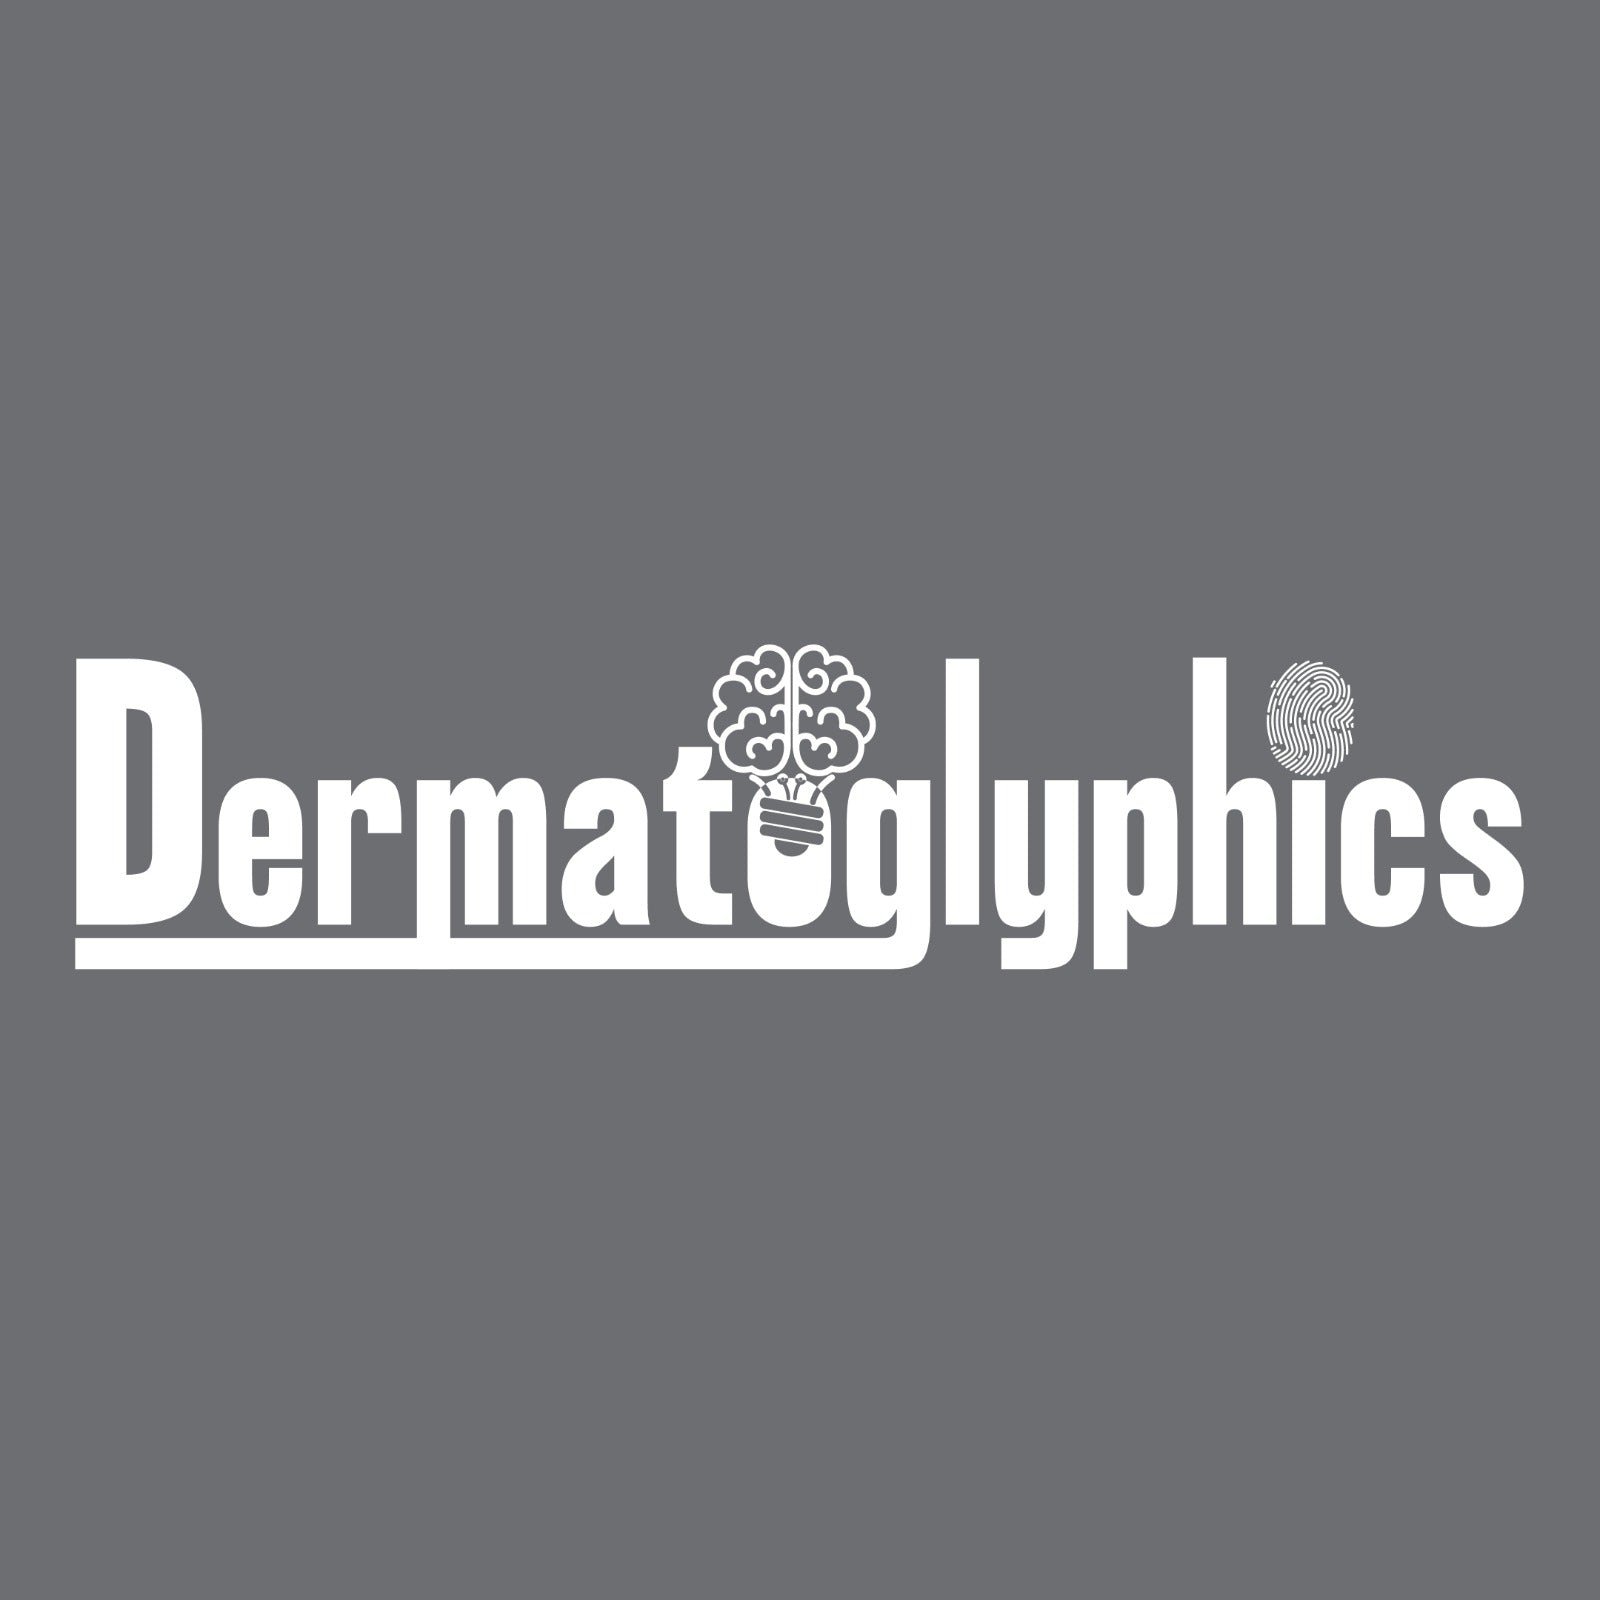 Dermatoglyphics (Innate Analysis)